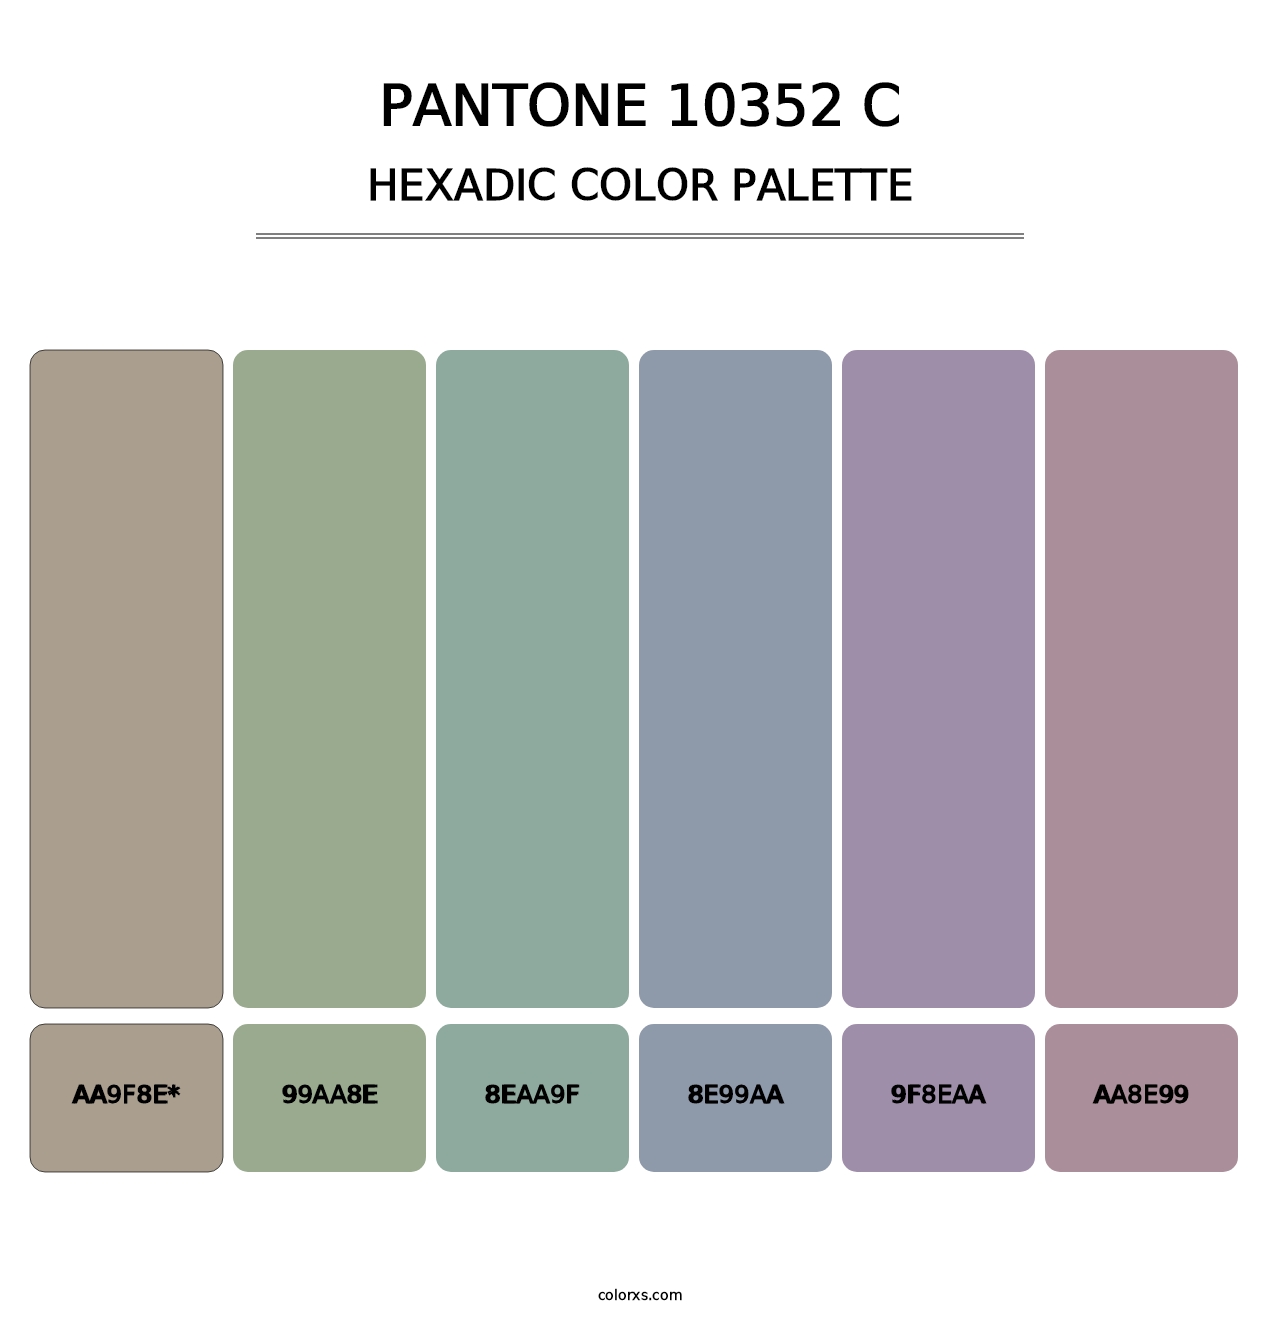 PANTONE 10352 C - Hexadic Color Palette